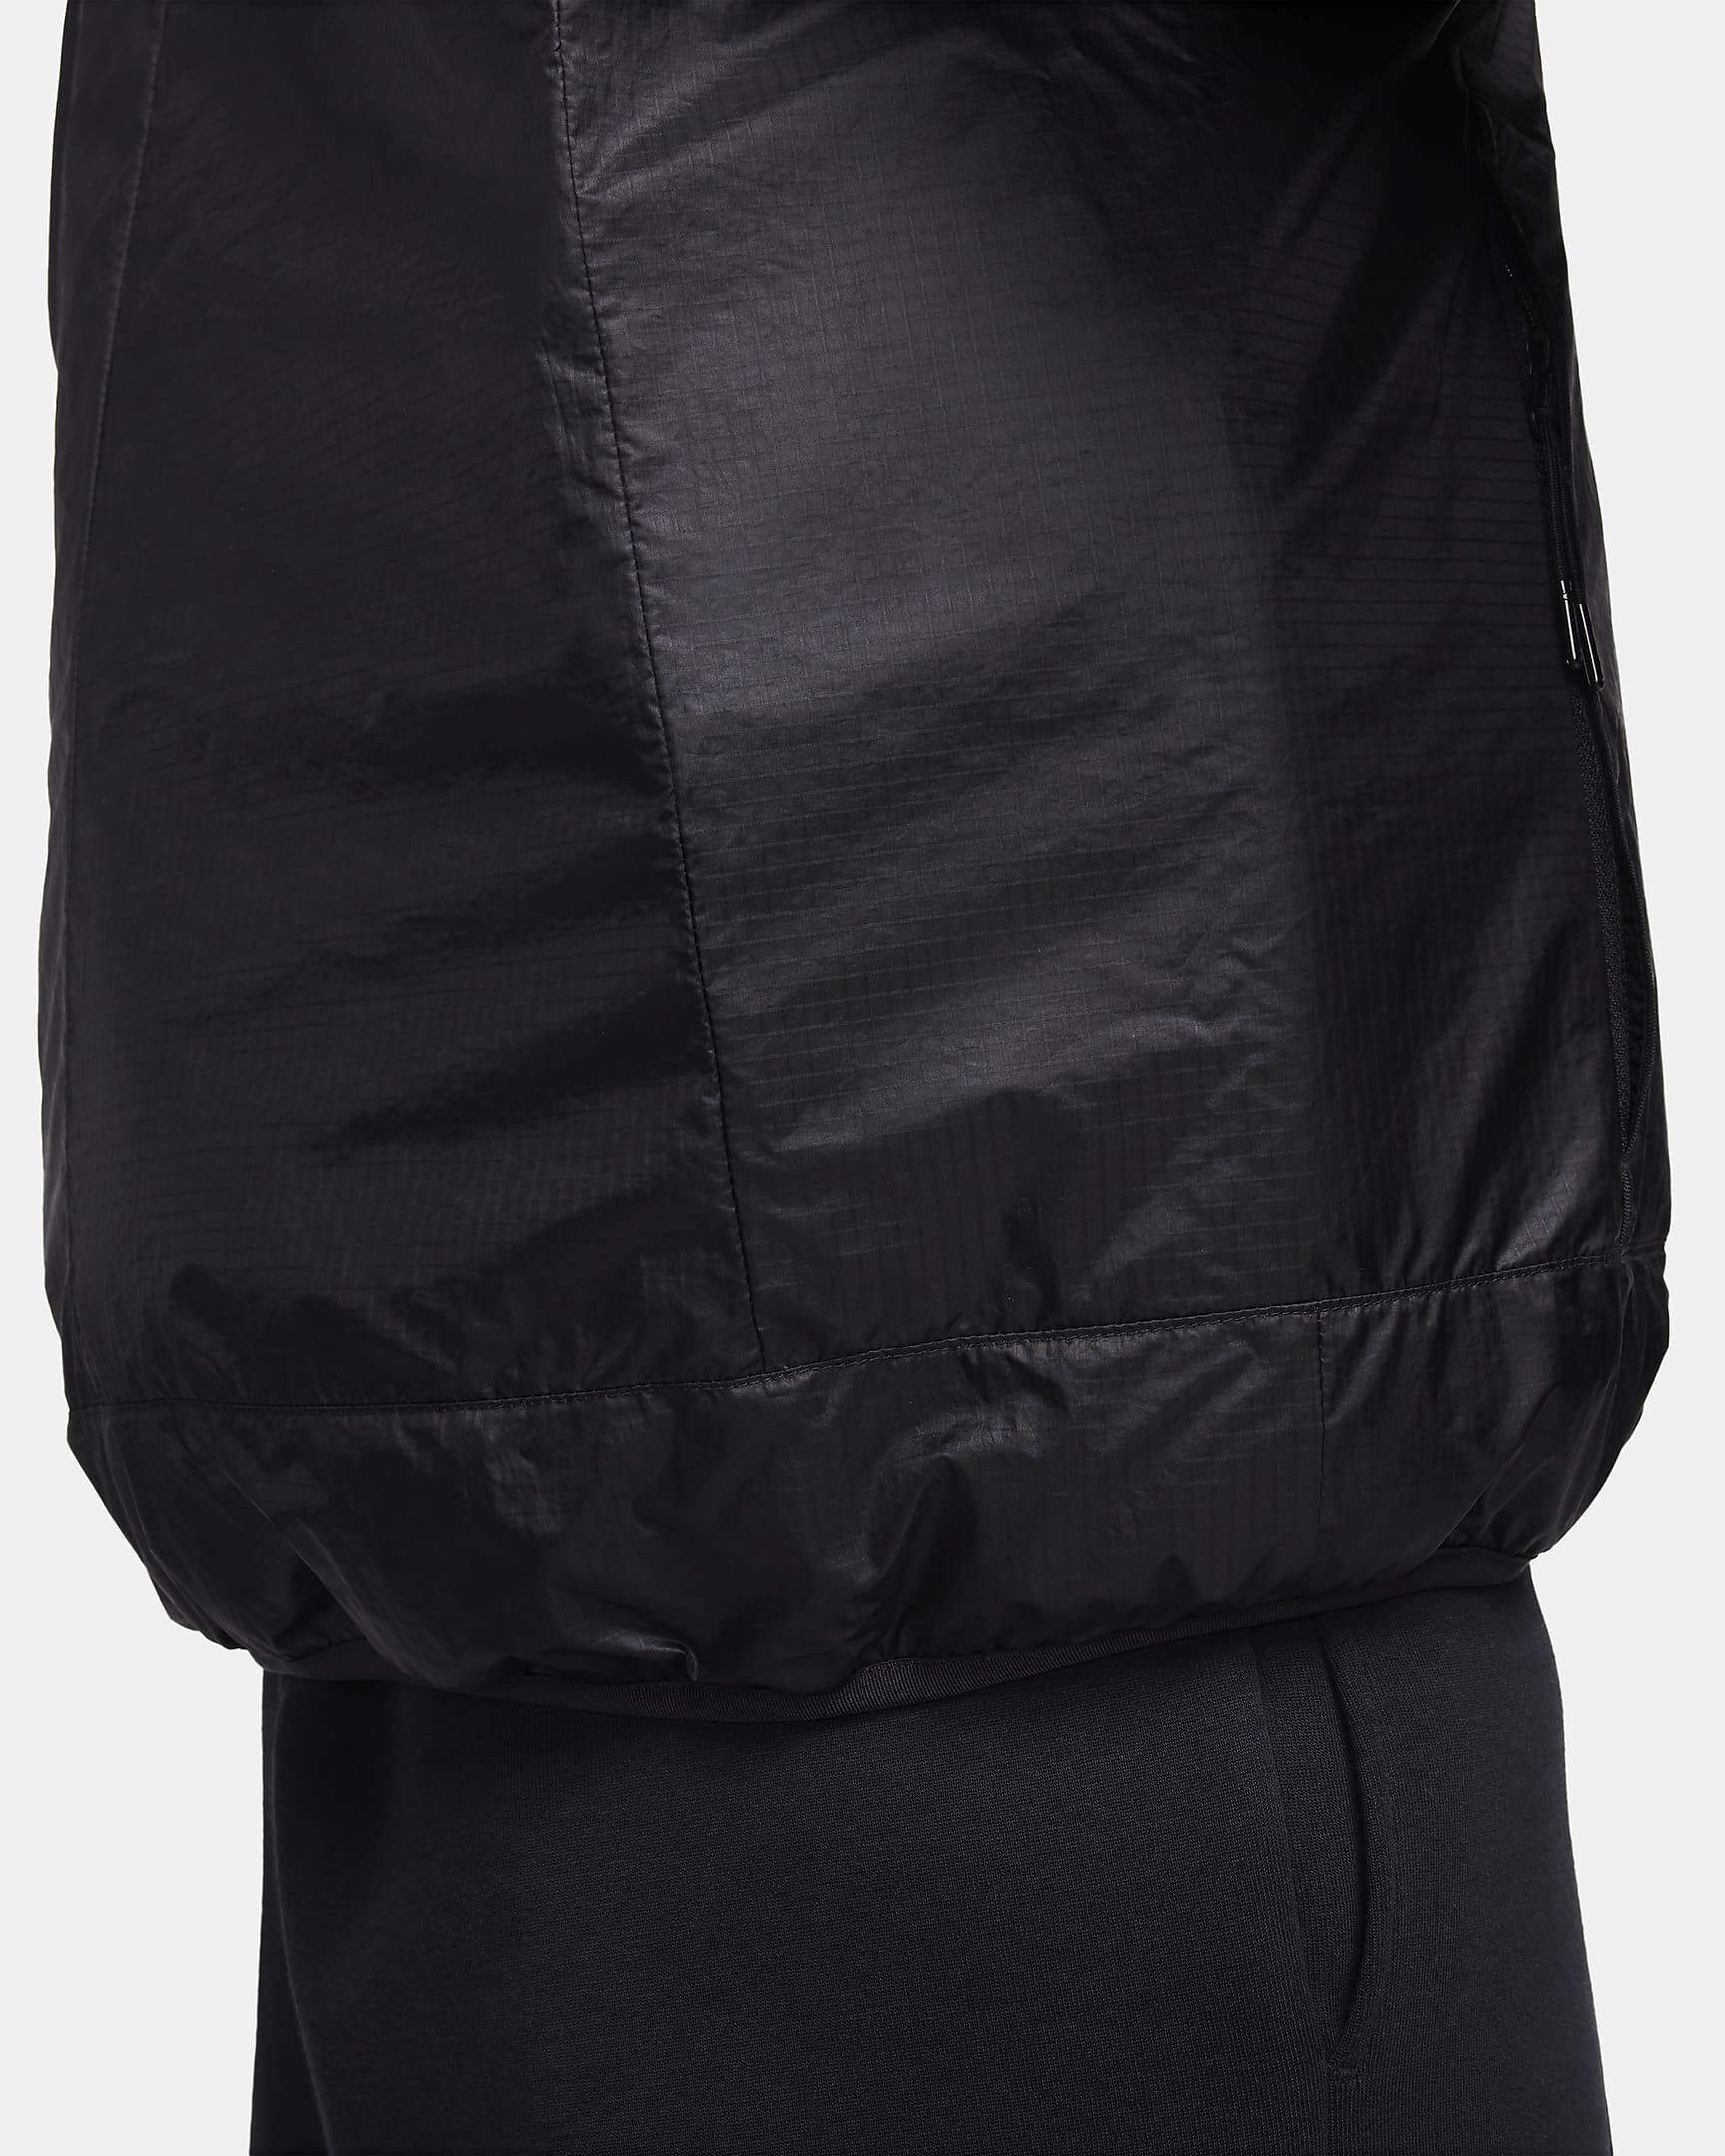 Nike Sportswear Tech Men's Therma-FIT Loose Insulated Jacket. Nike ZA